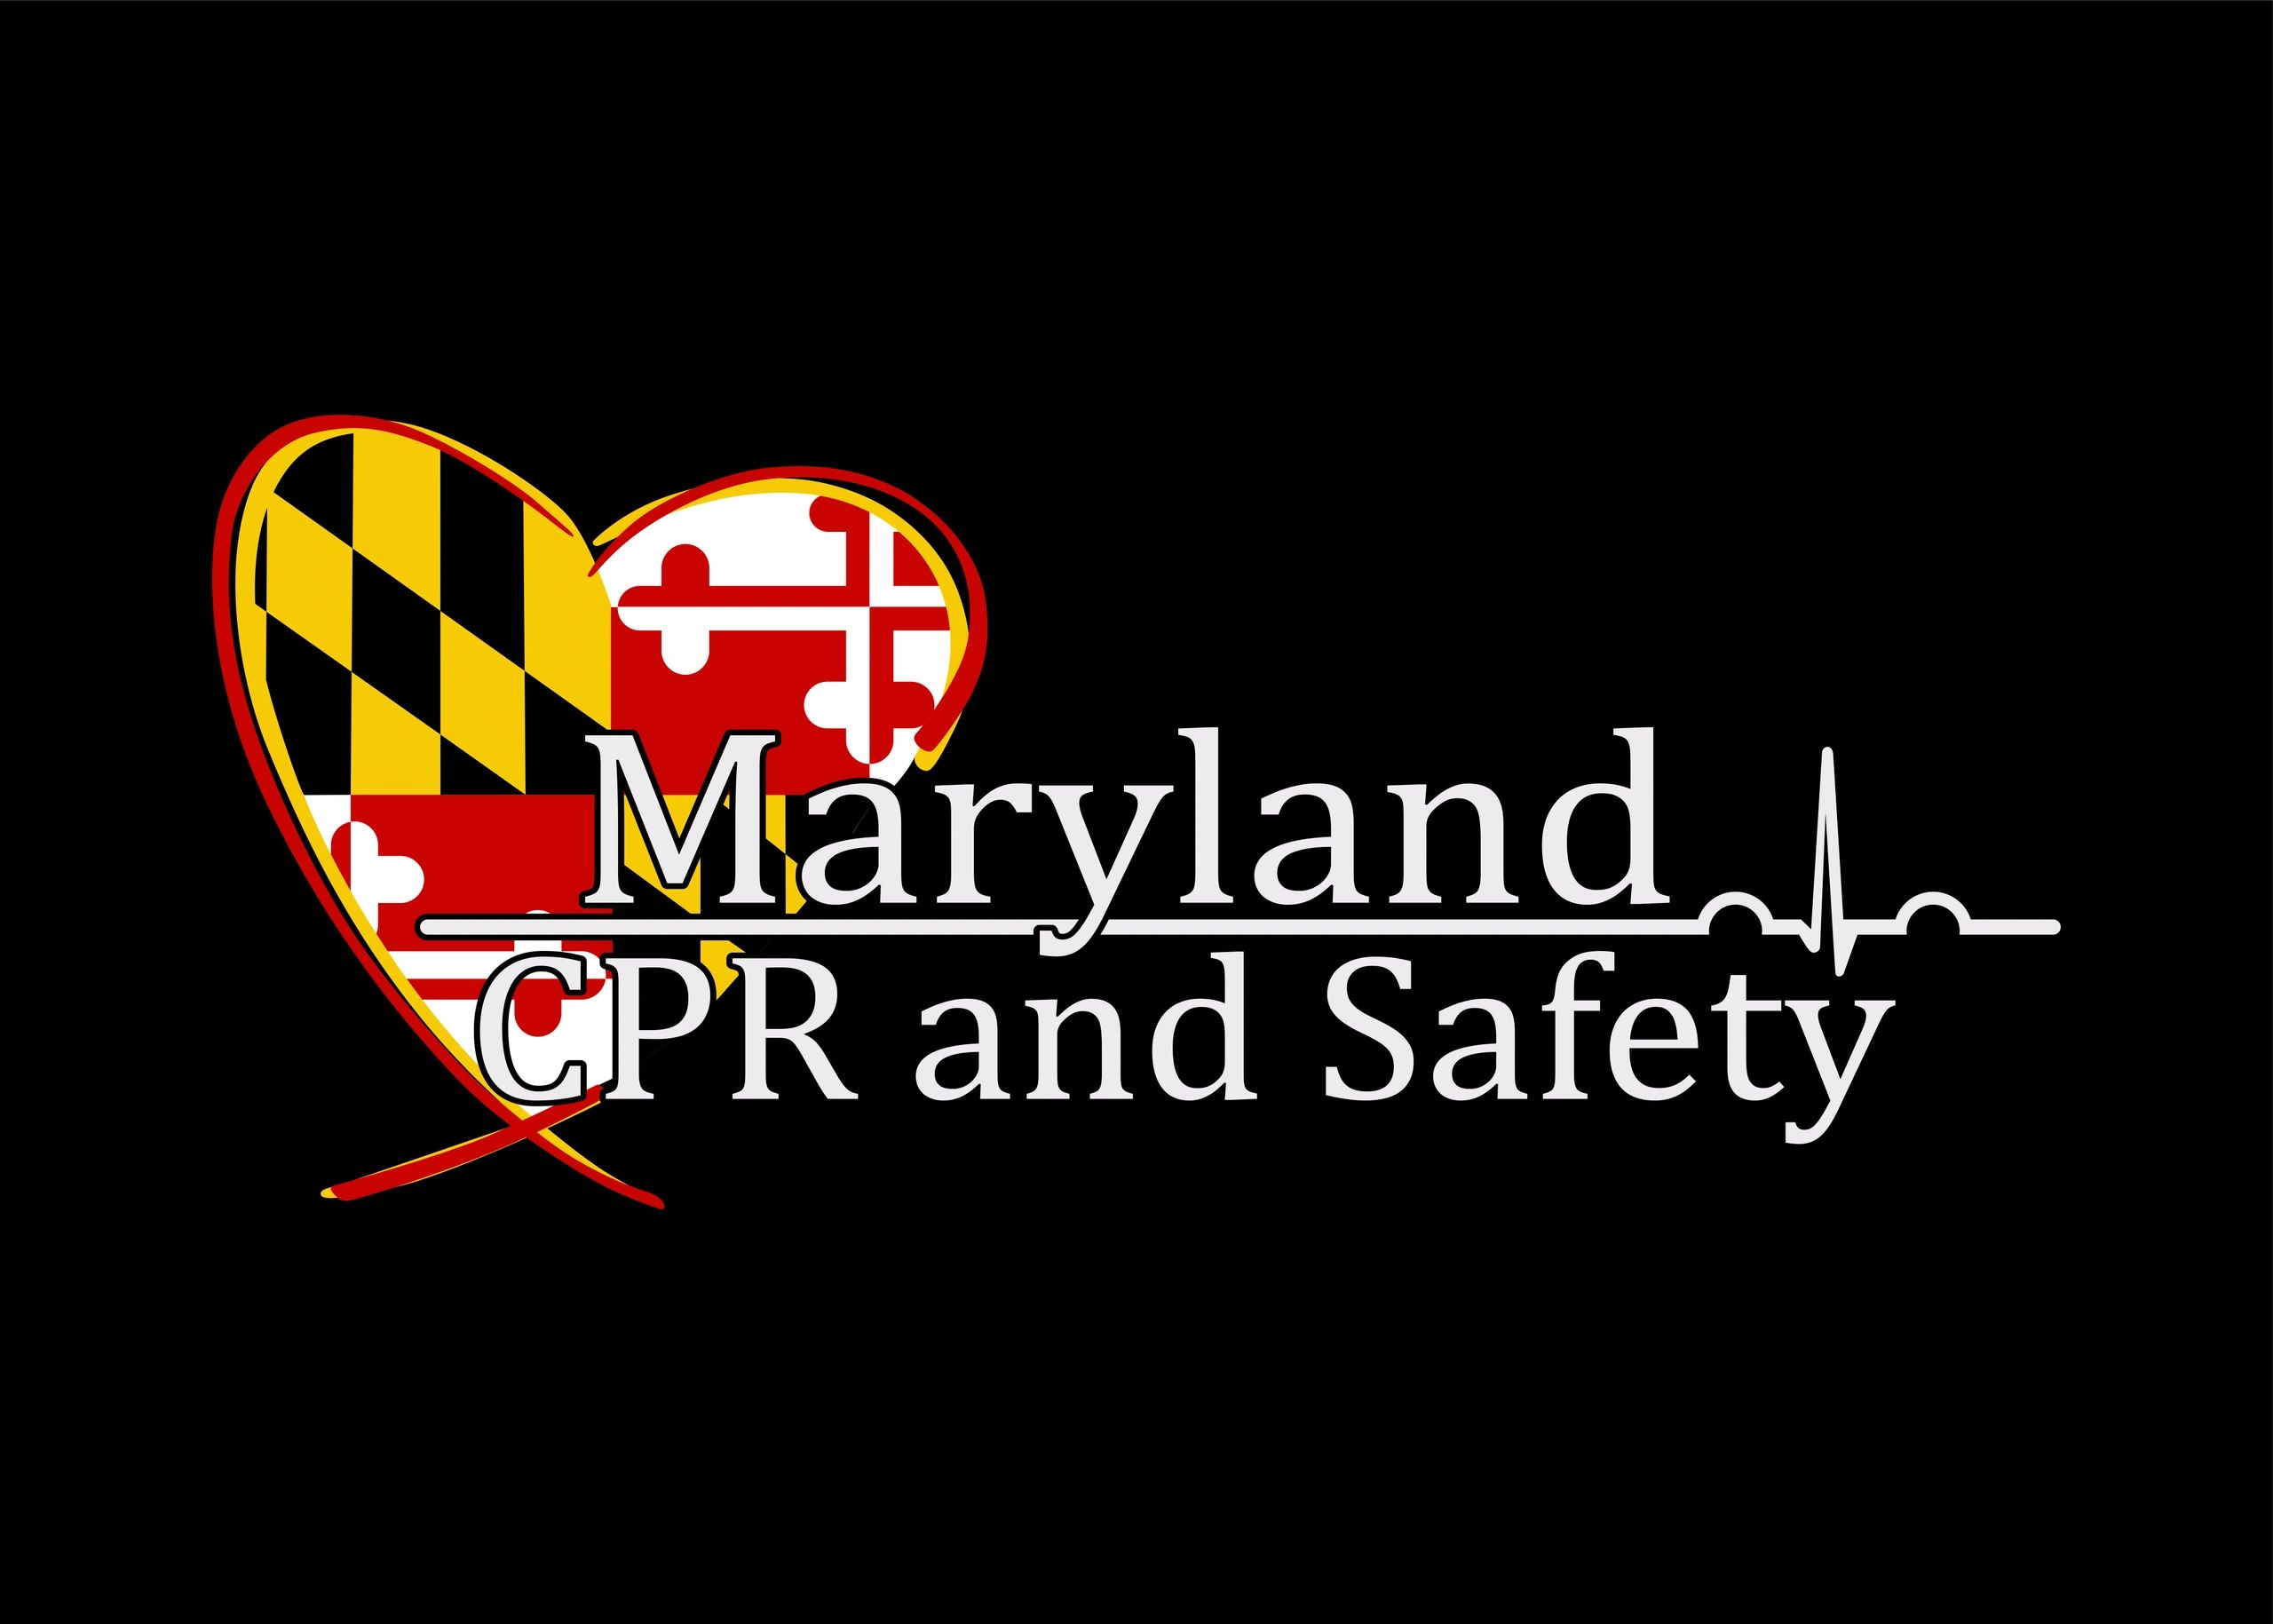 (c) Marylandcprandsafety.com